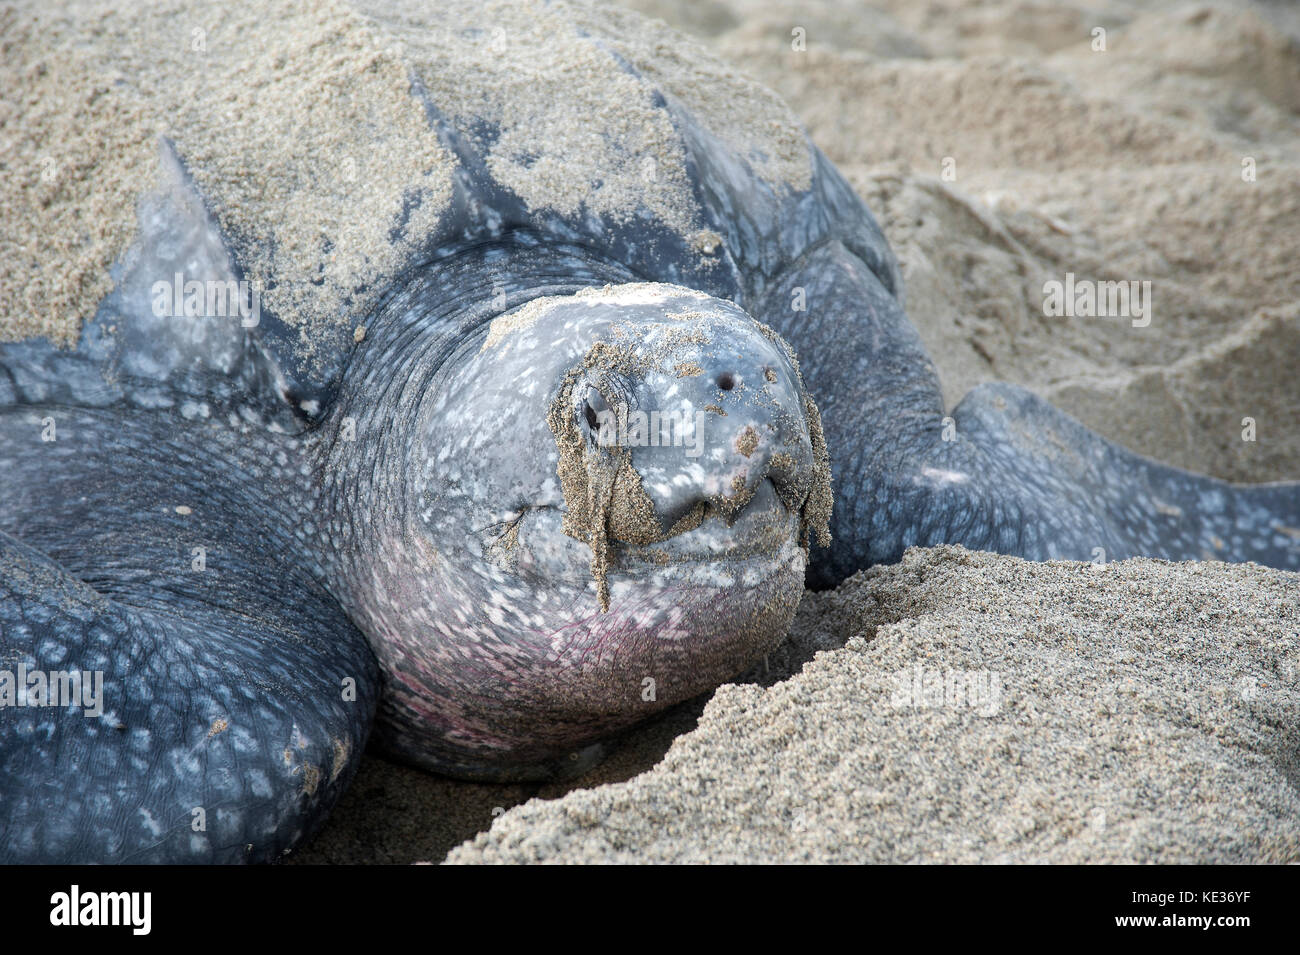 Nesting leatherback sea turtle (Dermochelys coriacea), Grande Riviere beach, Trinidad. Stock Photo